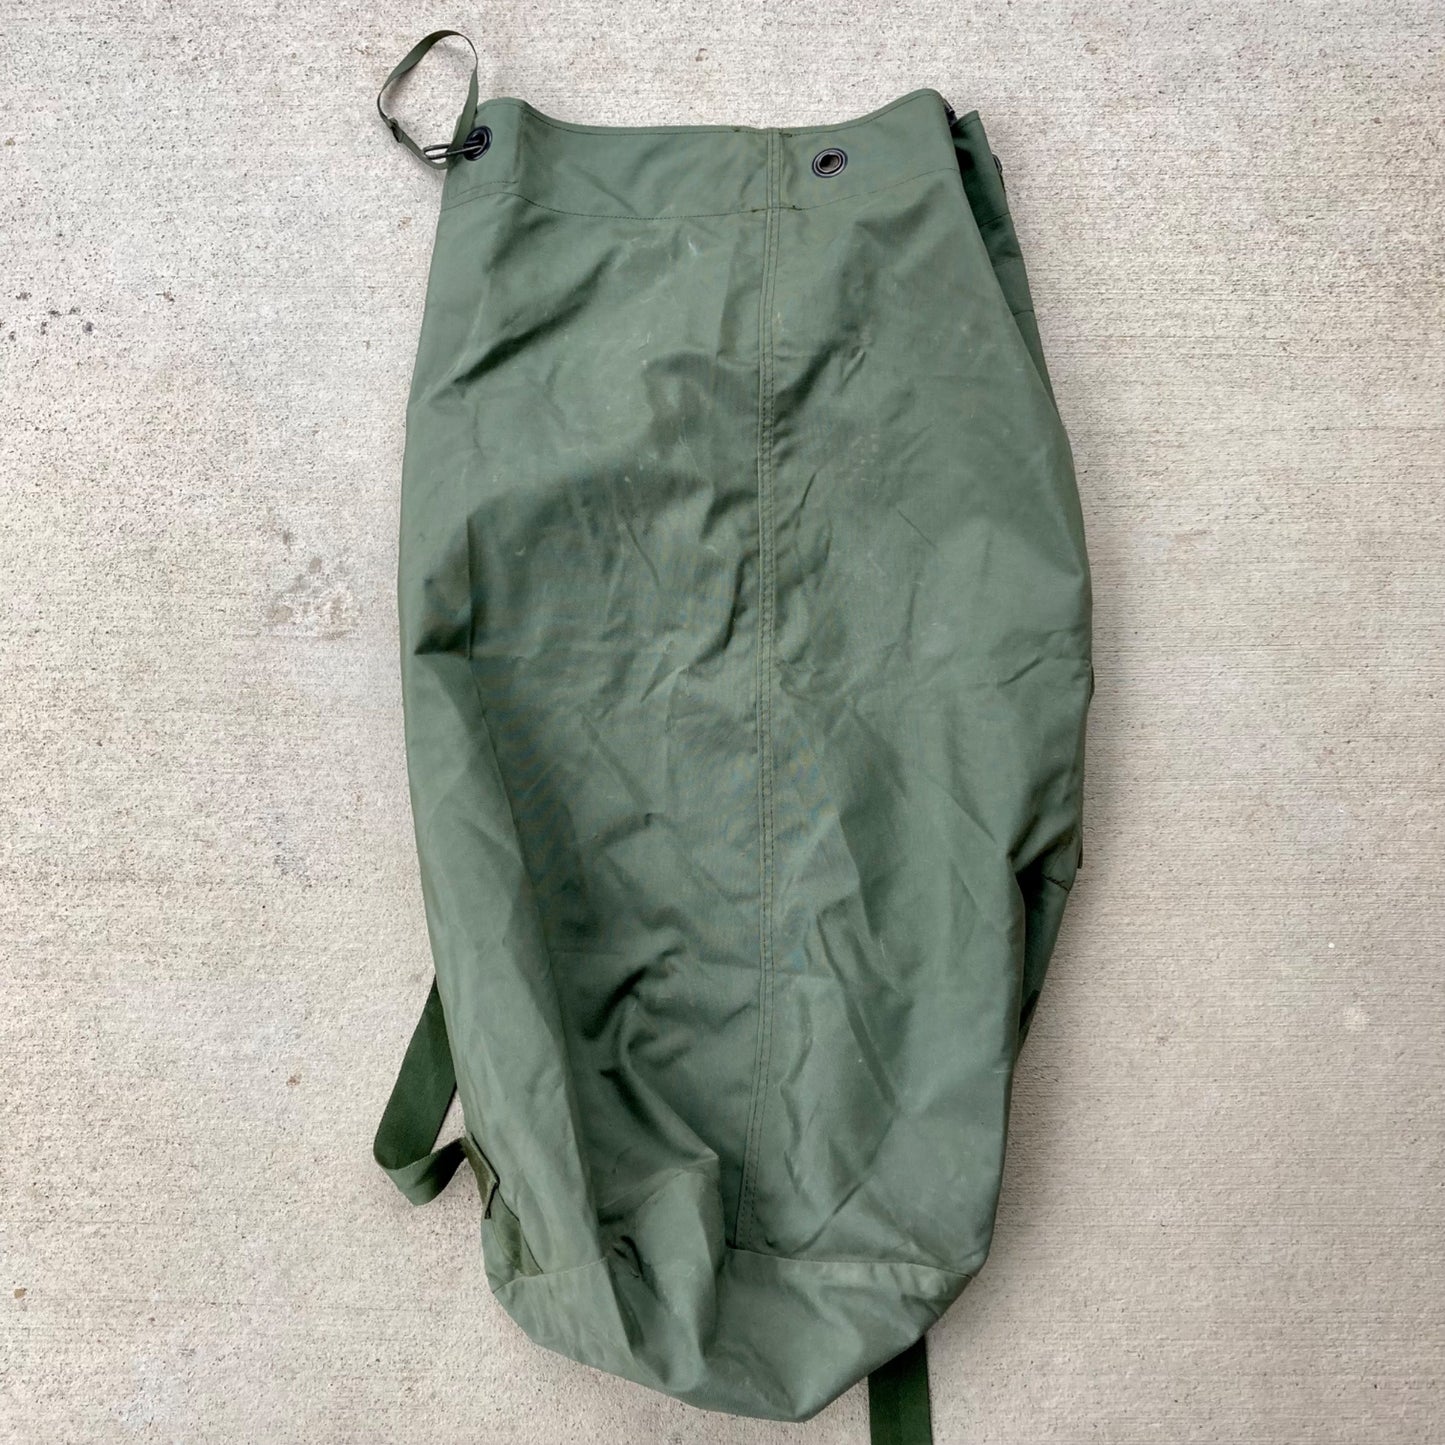 USGI Military Duffle Bag Olive Green w/Shoulder Straps Nylon VERY GOOD!